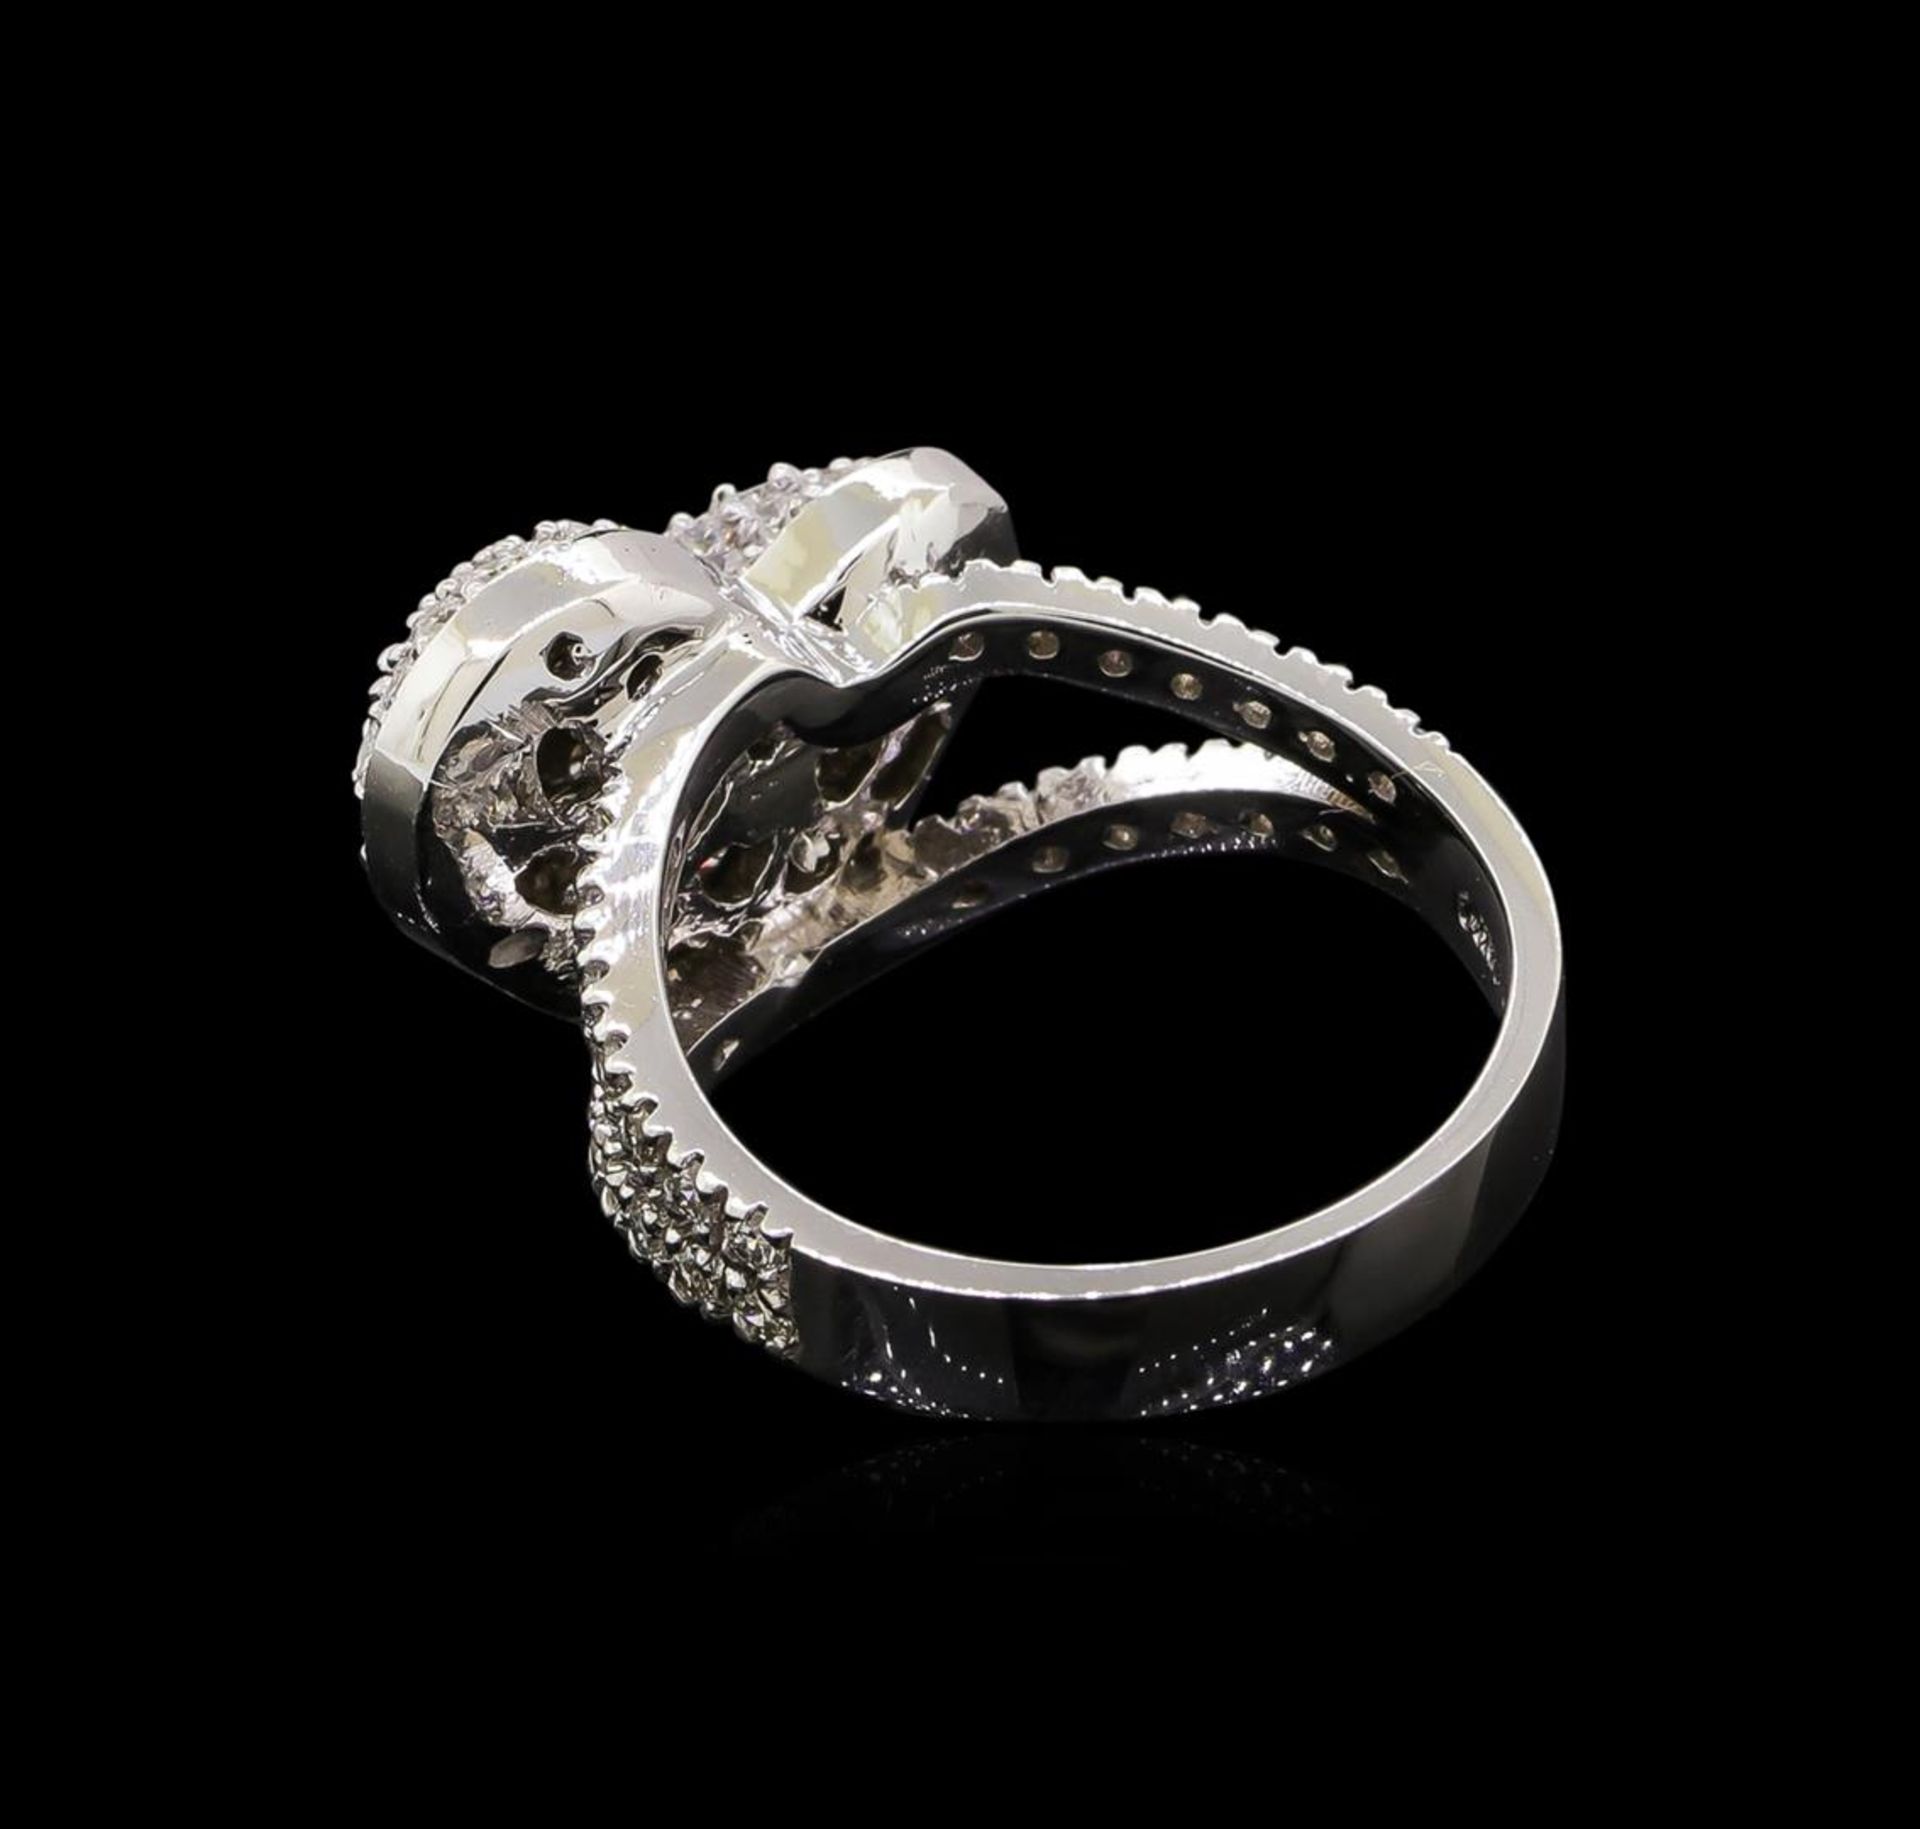 14KT White Gold 1.01 ctw Diamond Ring - Image 3 of 5